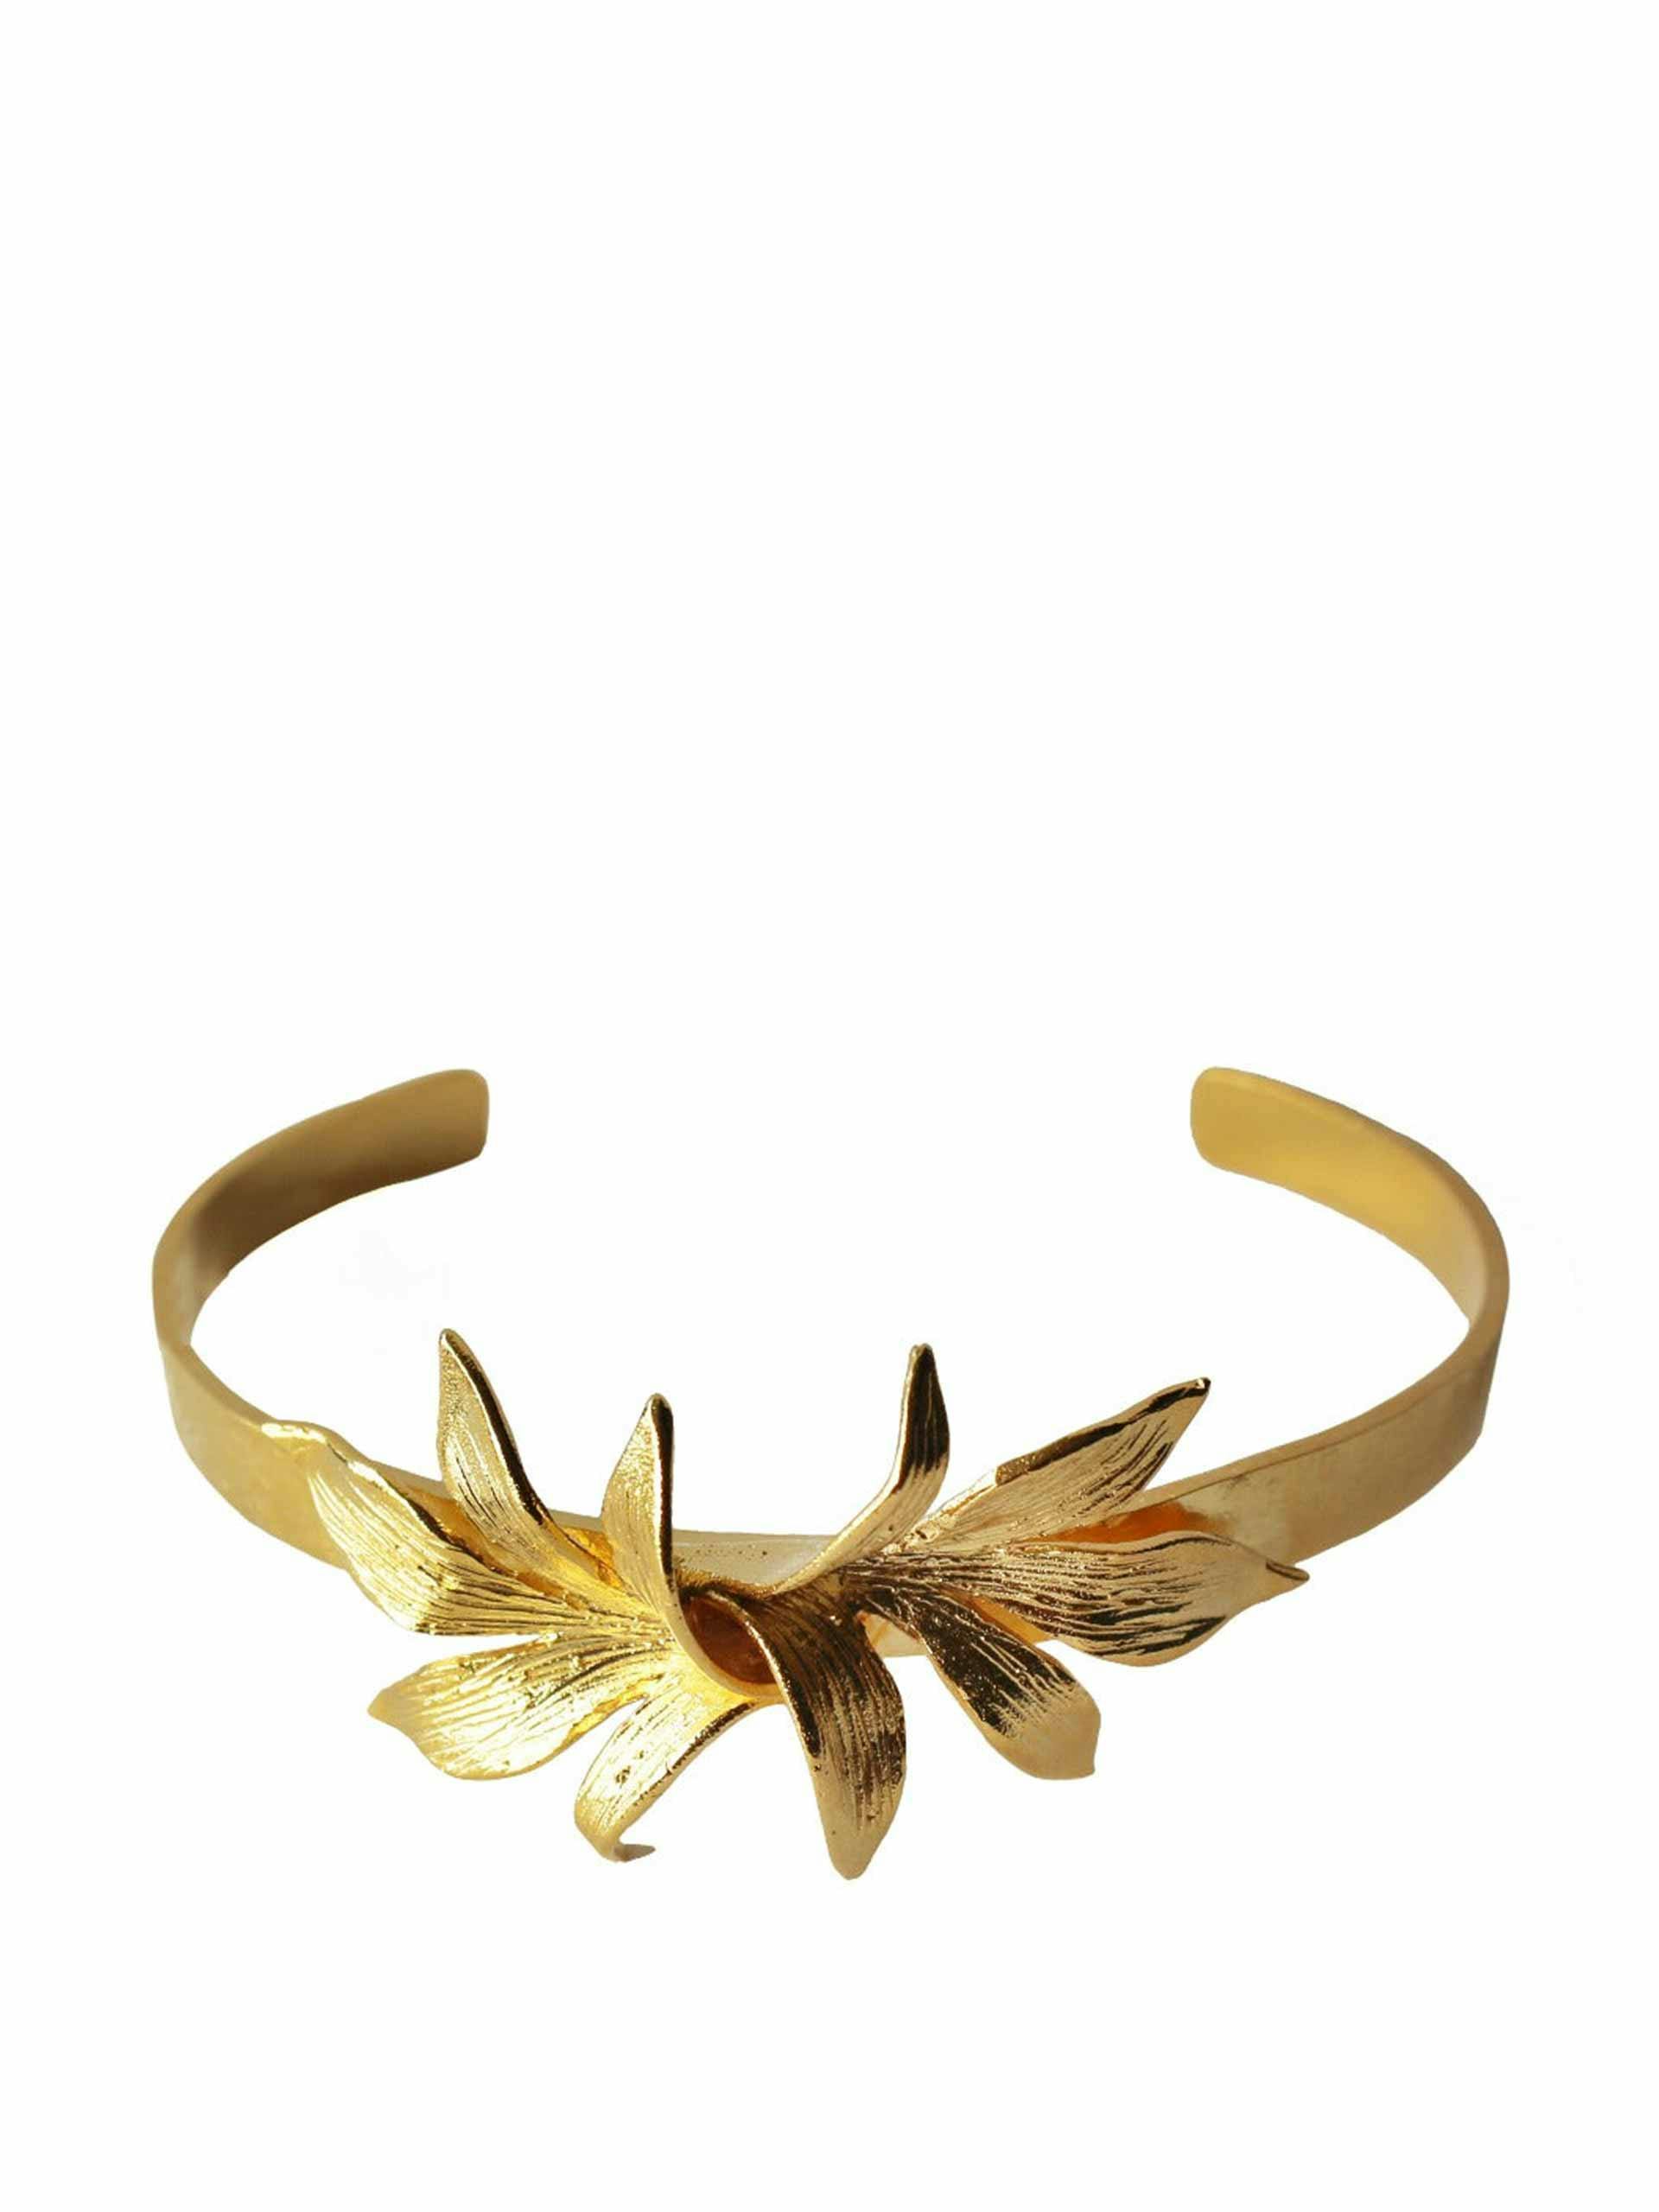 24 karat gold plated brass cuff bracelet